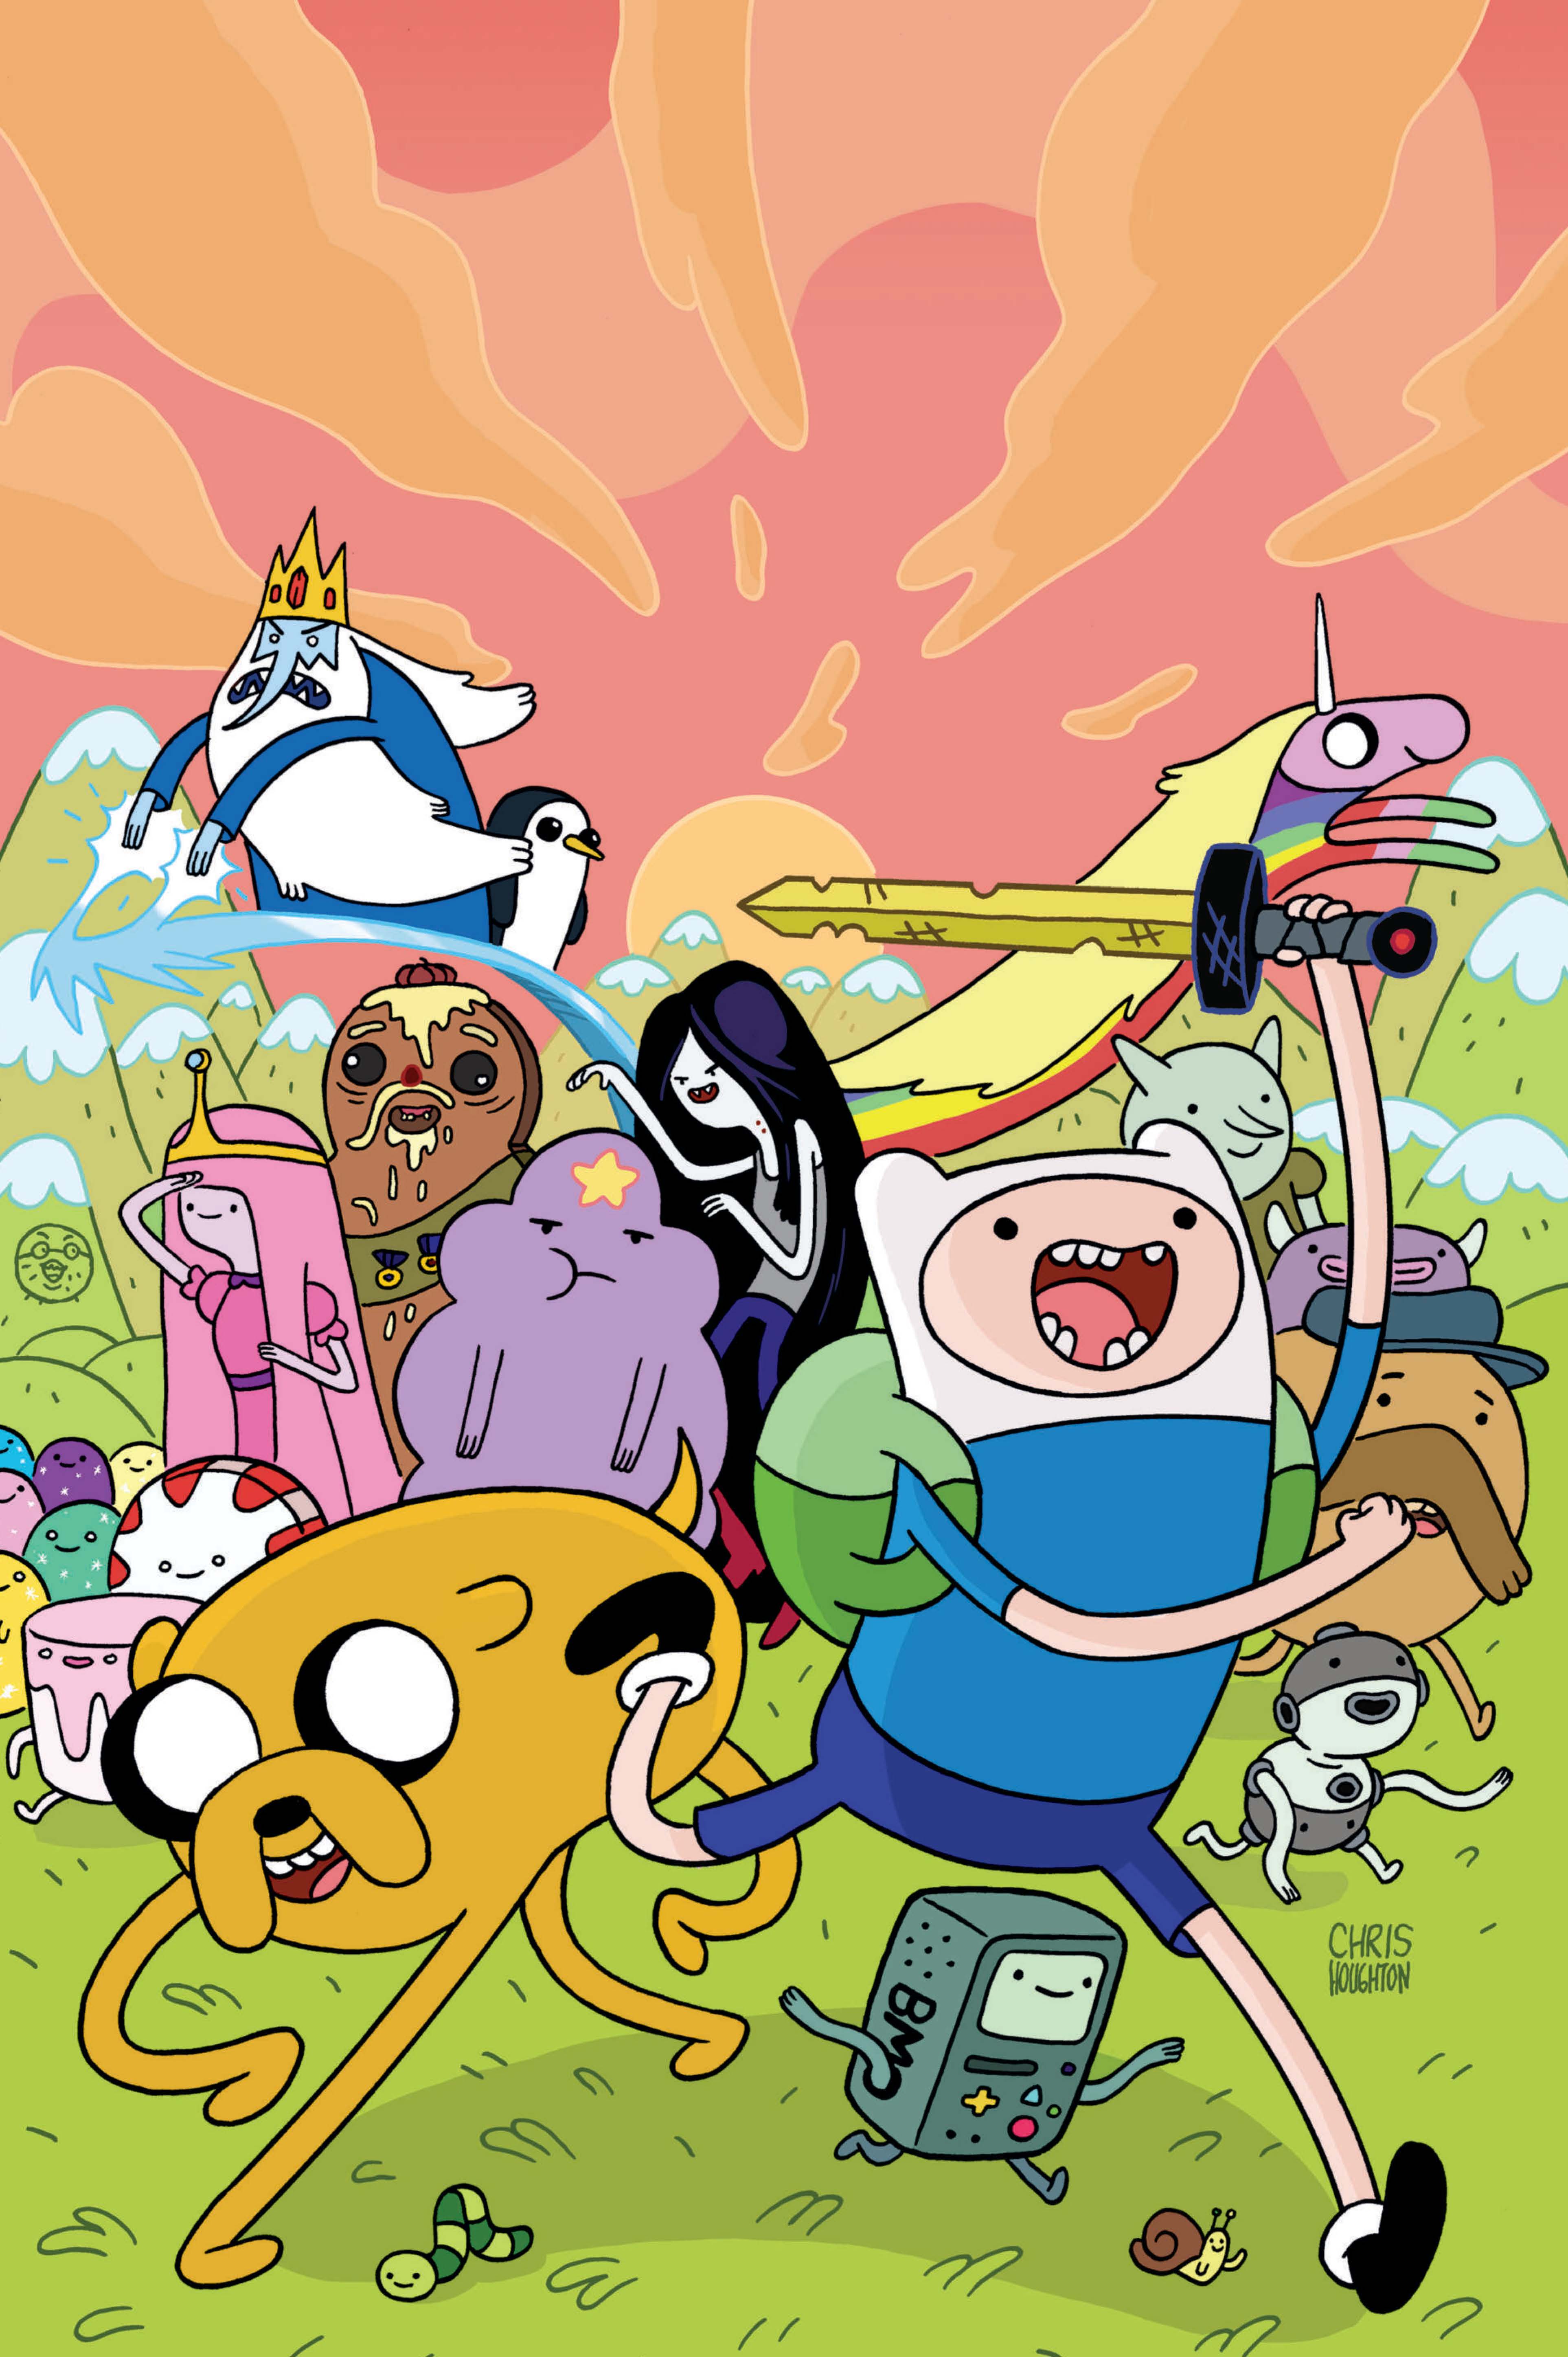 Poster times. Adventure time Финн и Джейк. Комиксы адвентуре тайм.